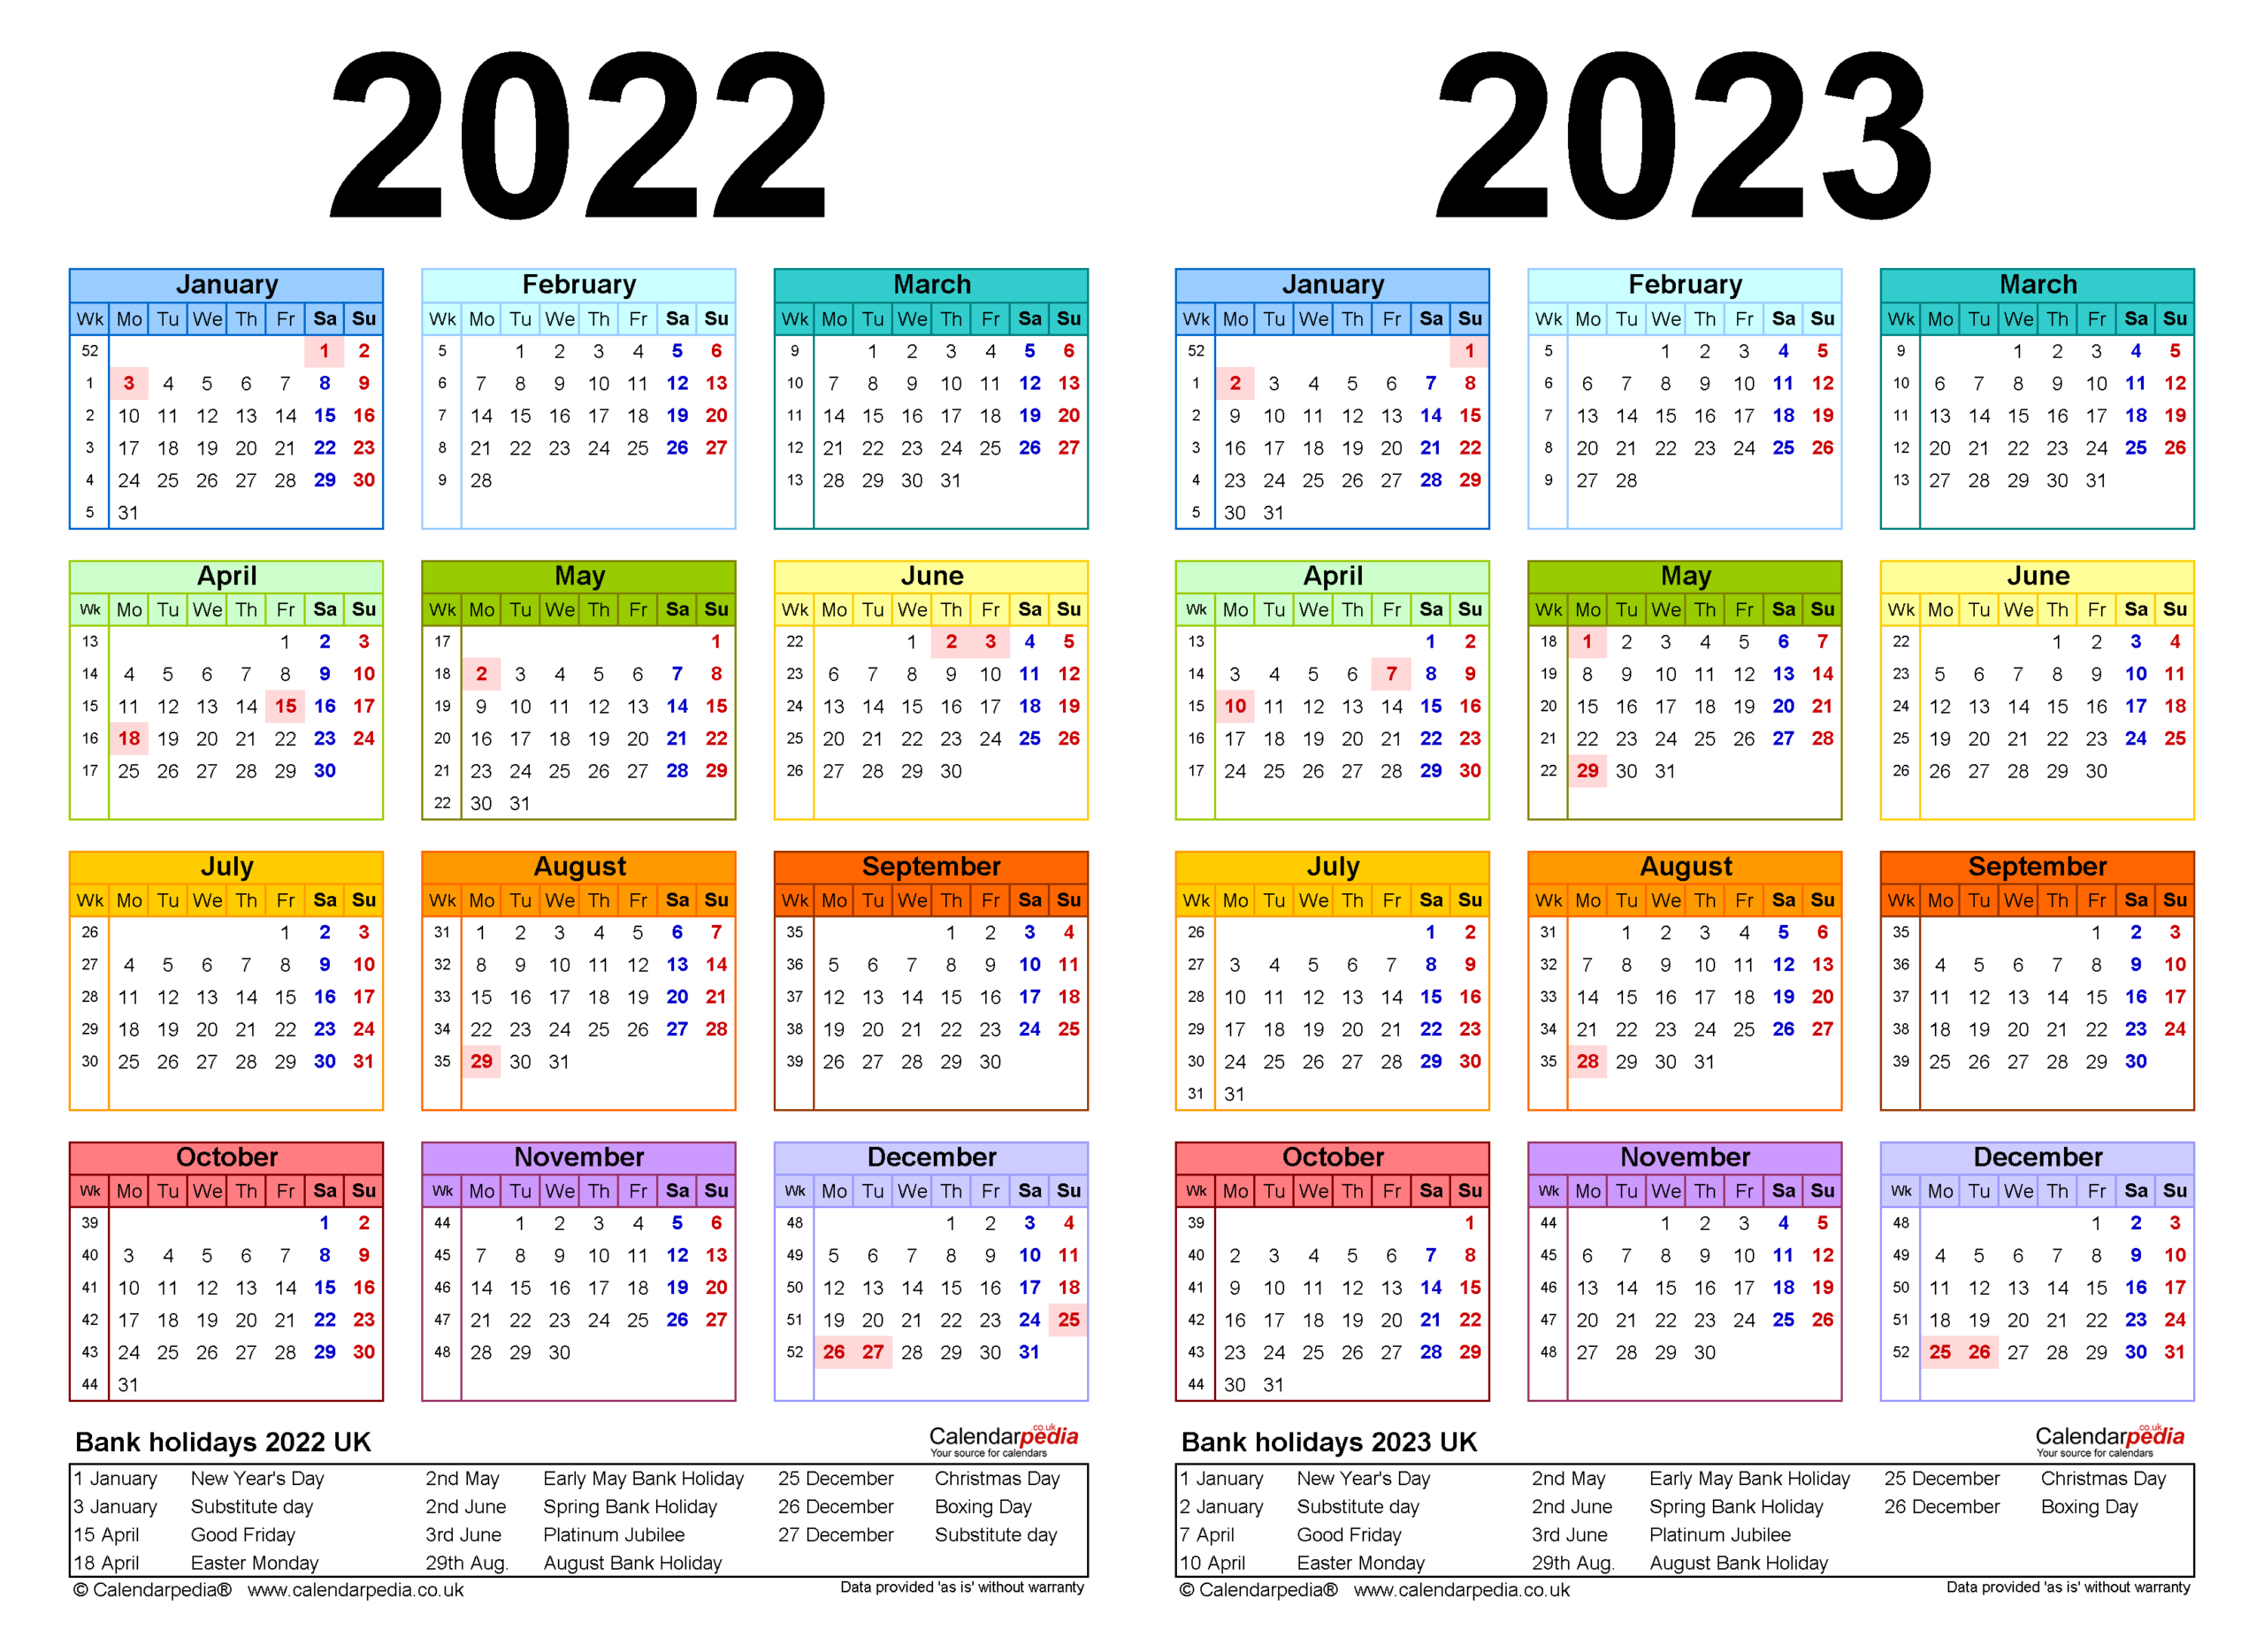 Bangladesh Bank Holiday Calendar 2022